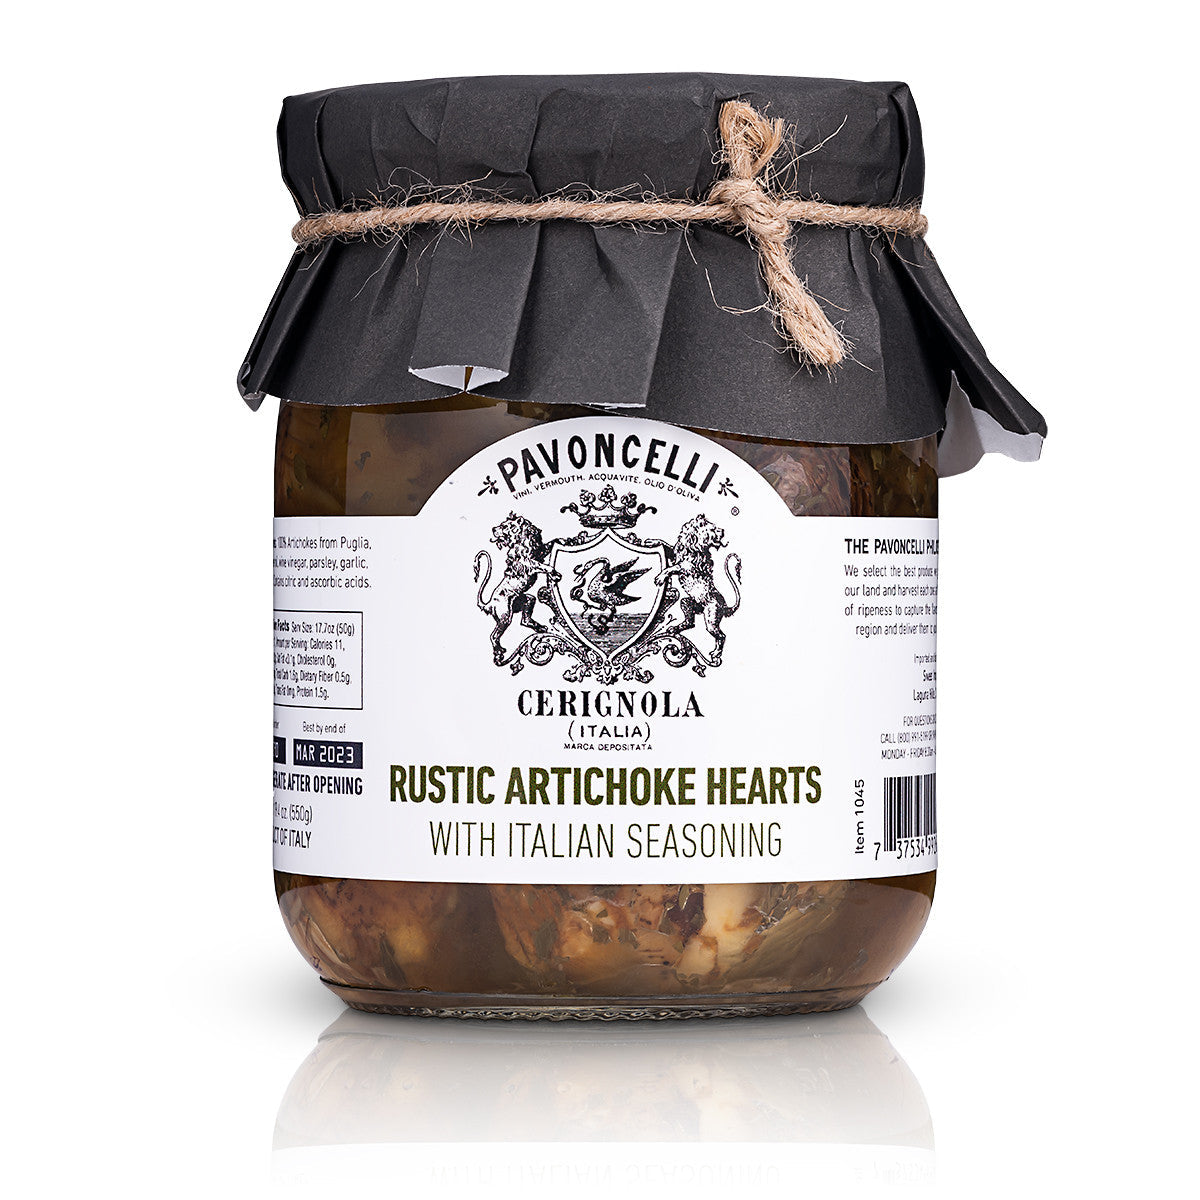 Rustic Artichoke Hearts with Italian Seasoning